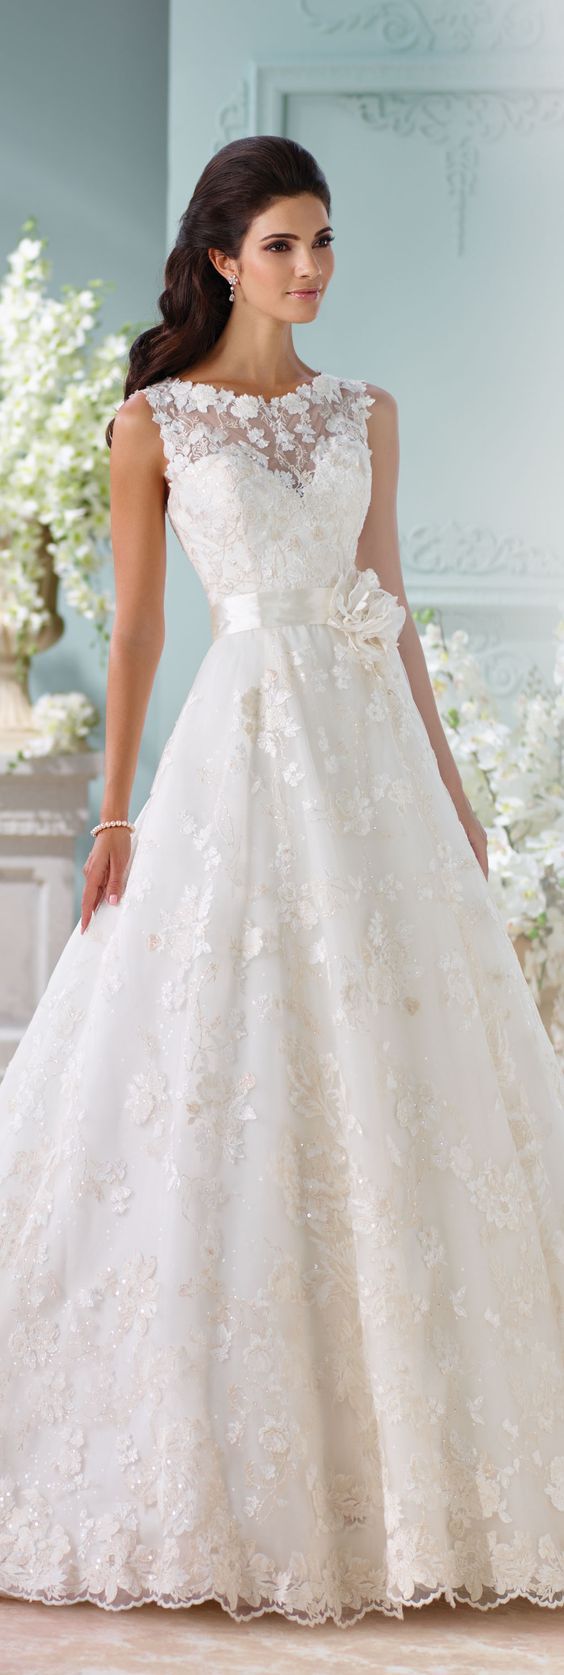 Hochzeit - Wedding Dress With Lace Back